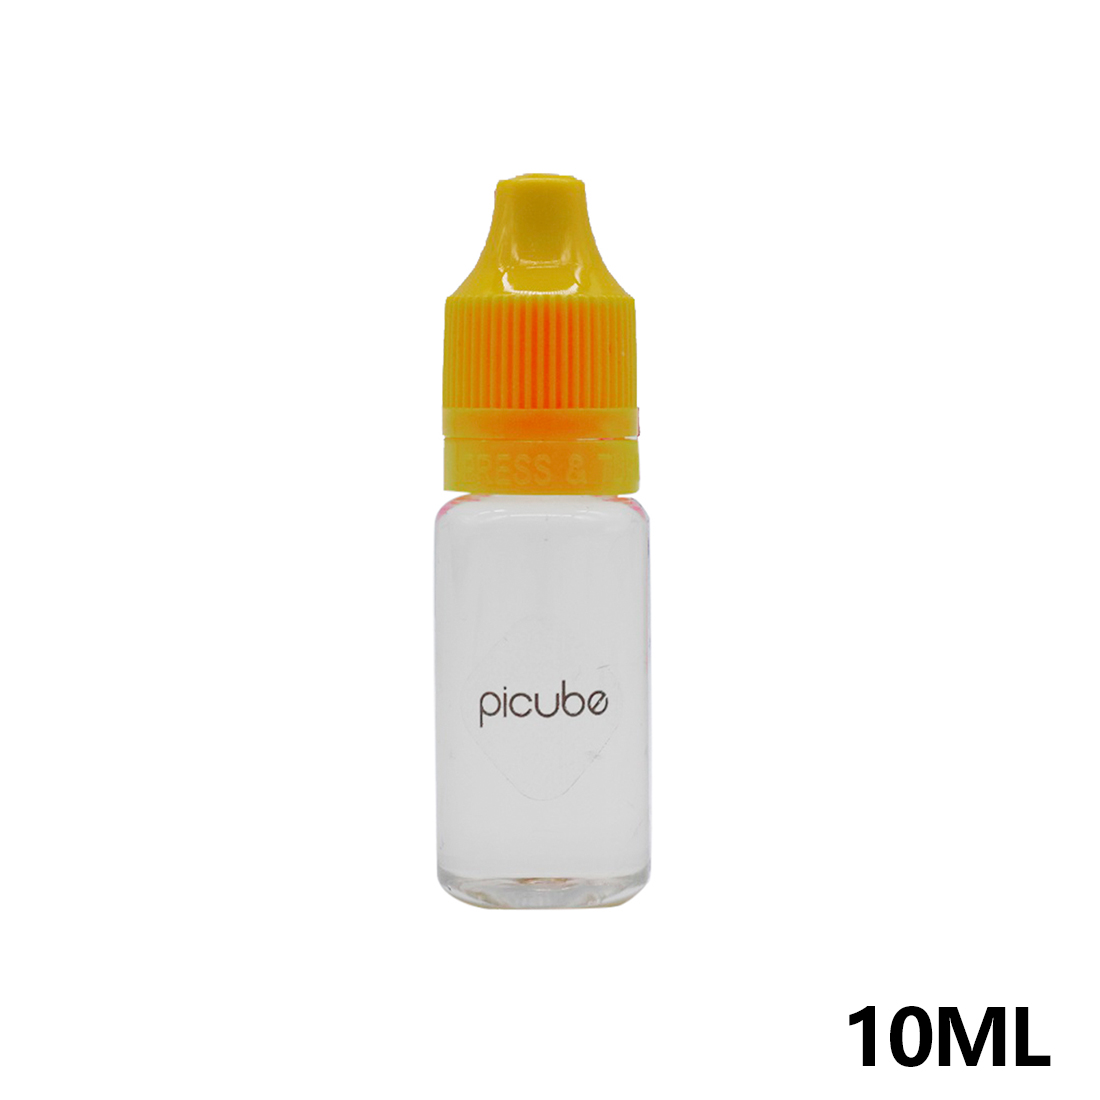 Picube 10ml speed cube lube (Yellow Cap)